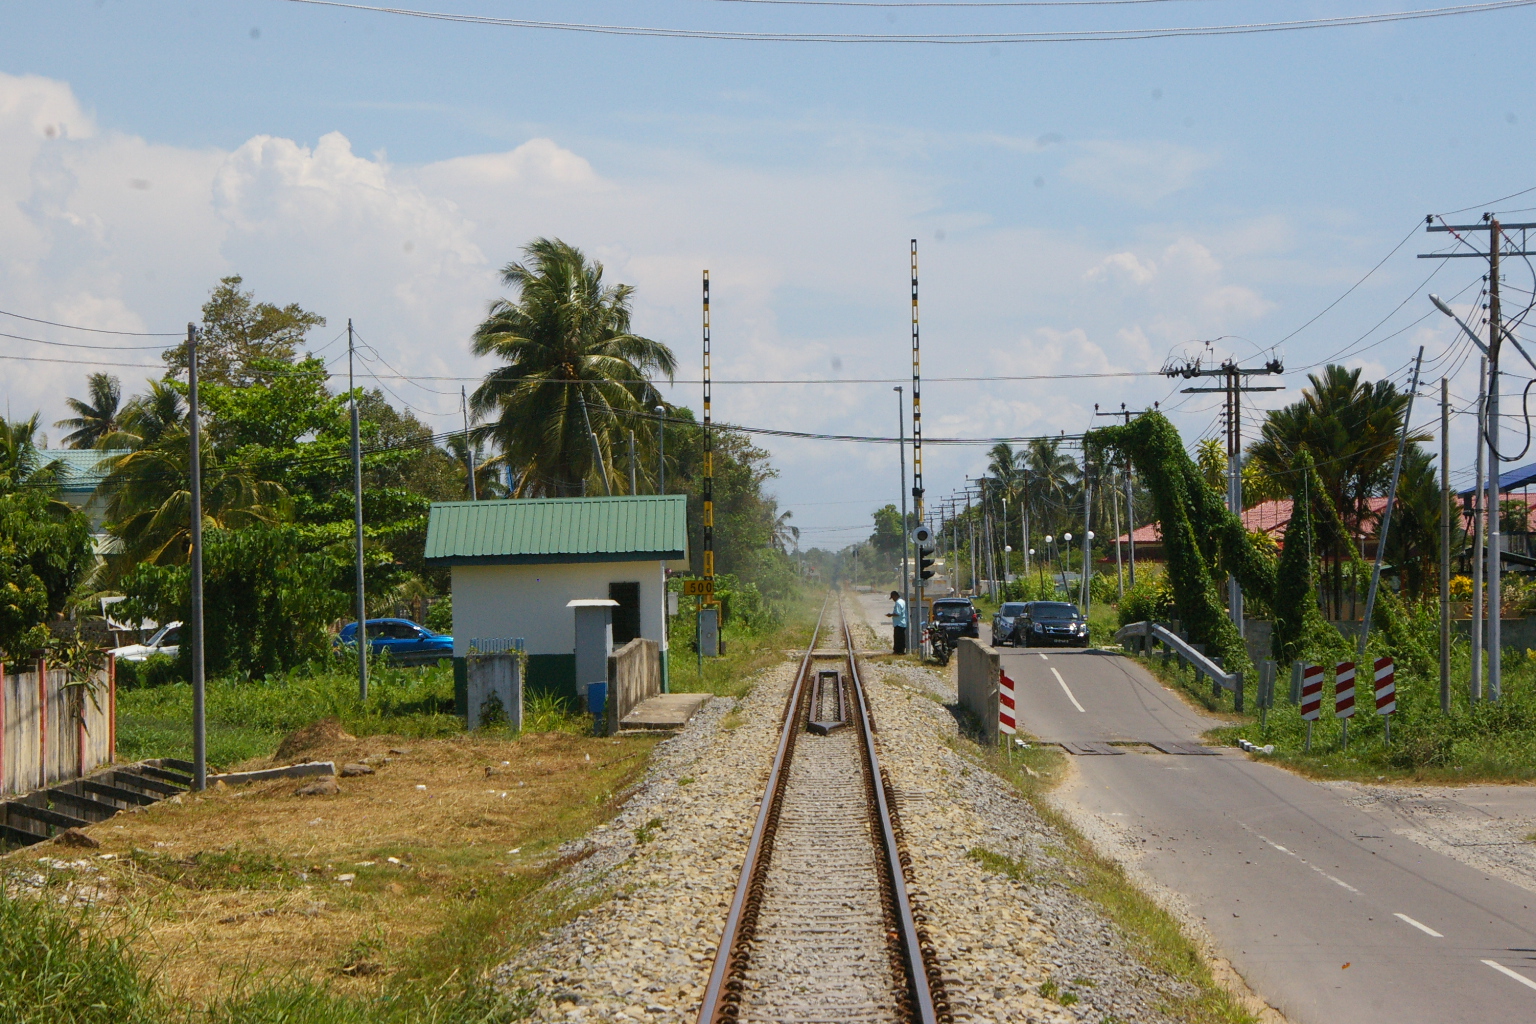 Bongawan Station〜Kimanis Station, West Coast Division, Malaysia April 30,2014